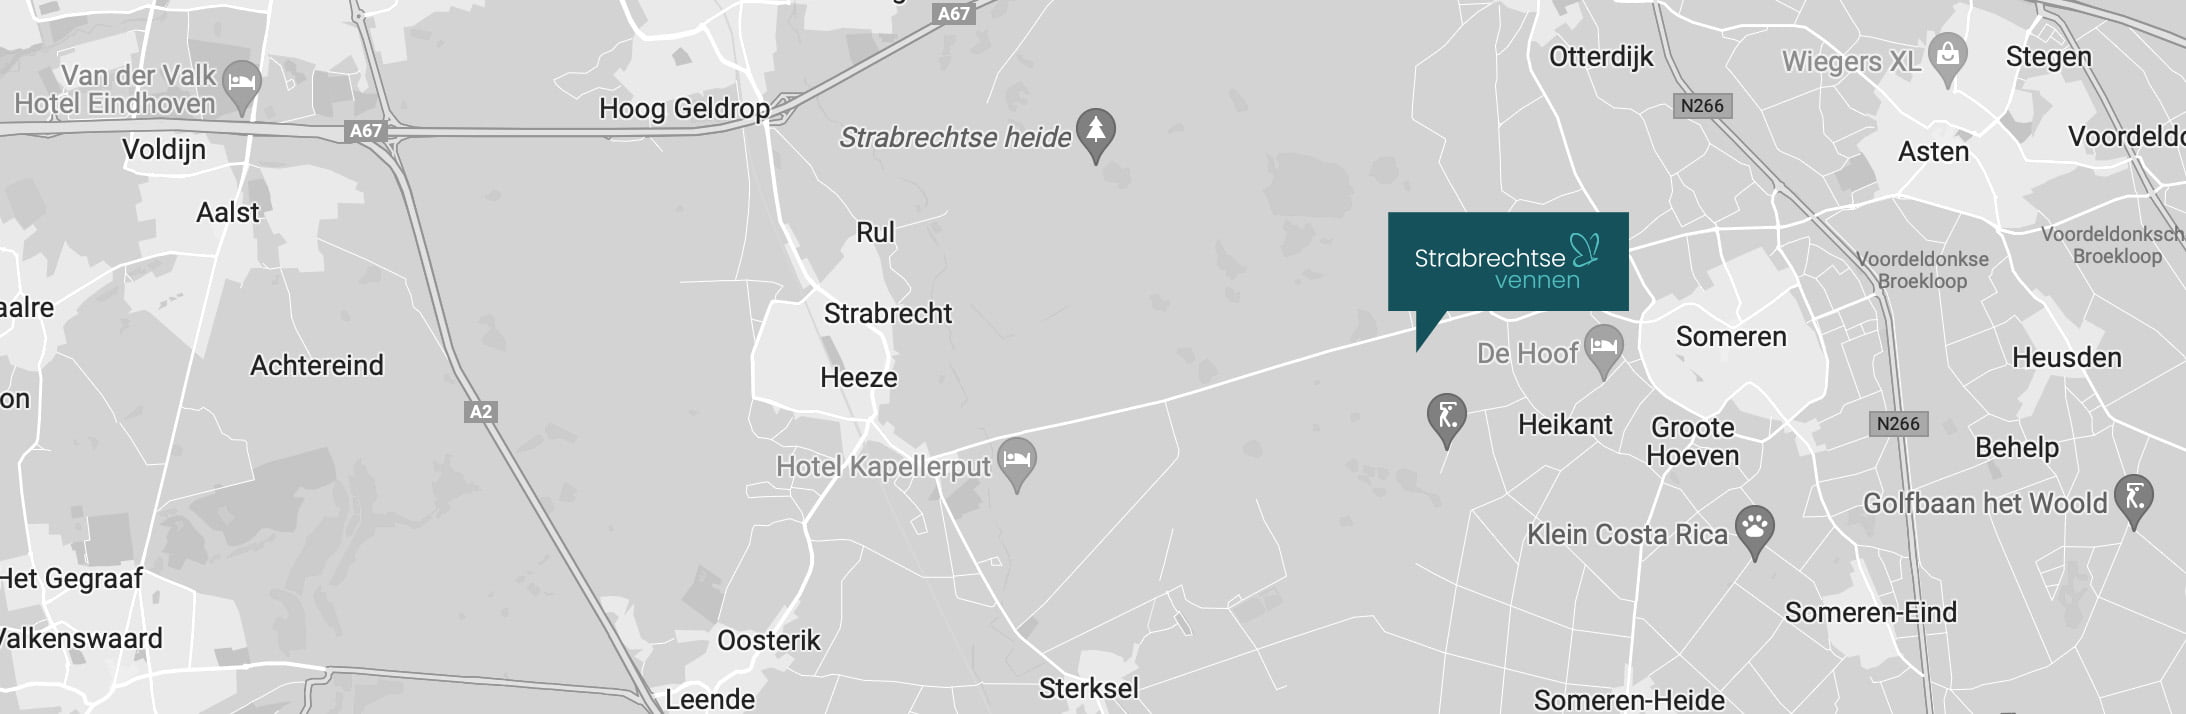 Kaart locatie Strabrechtse Vennen